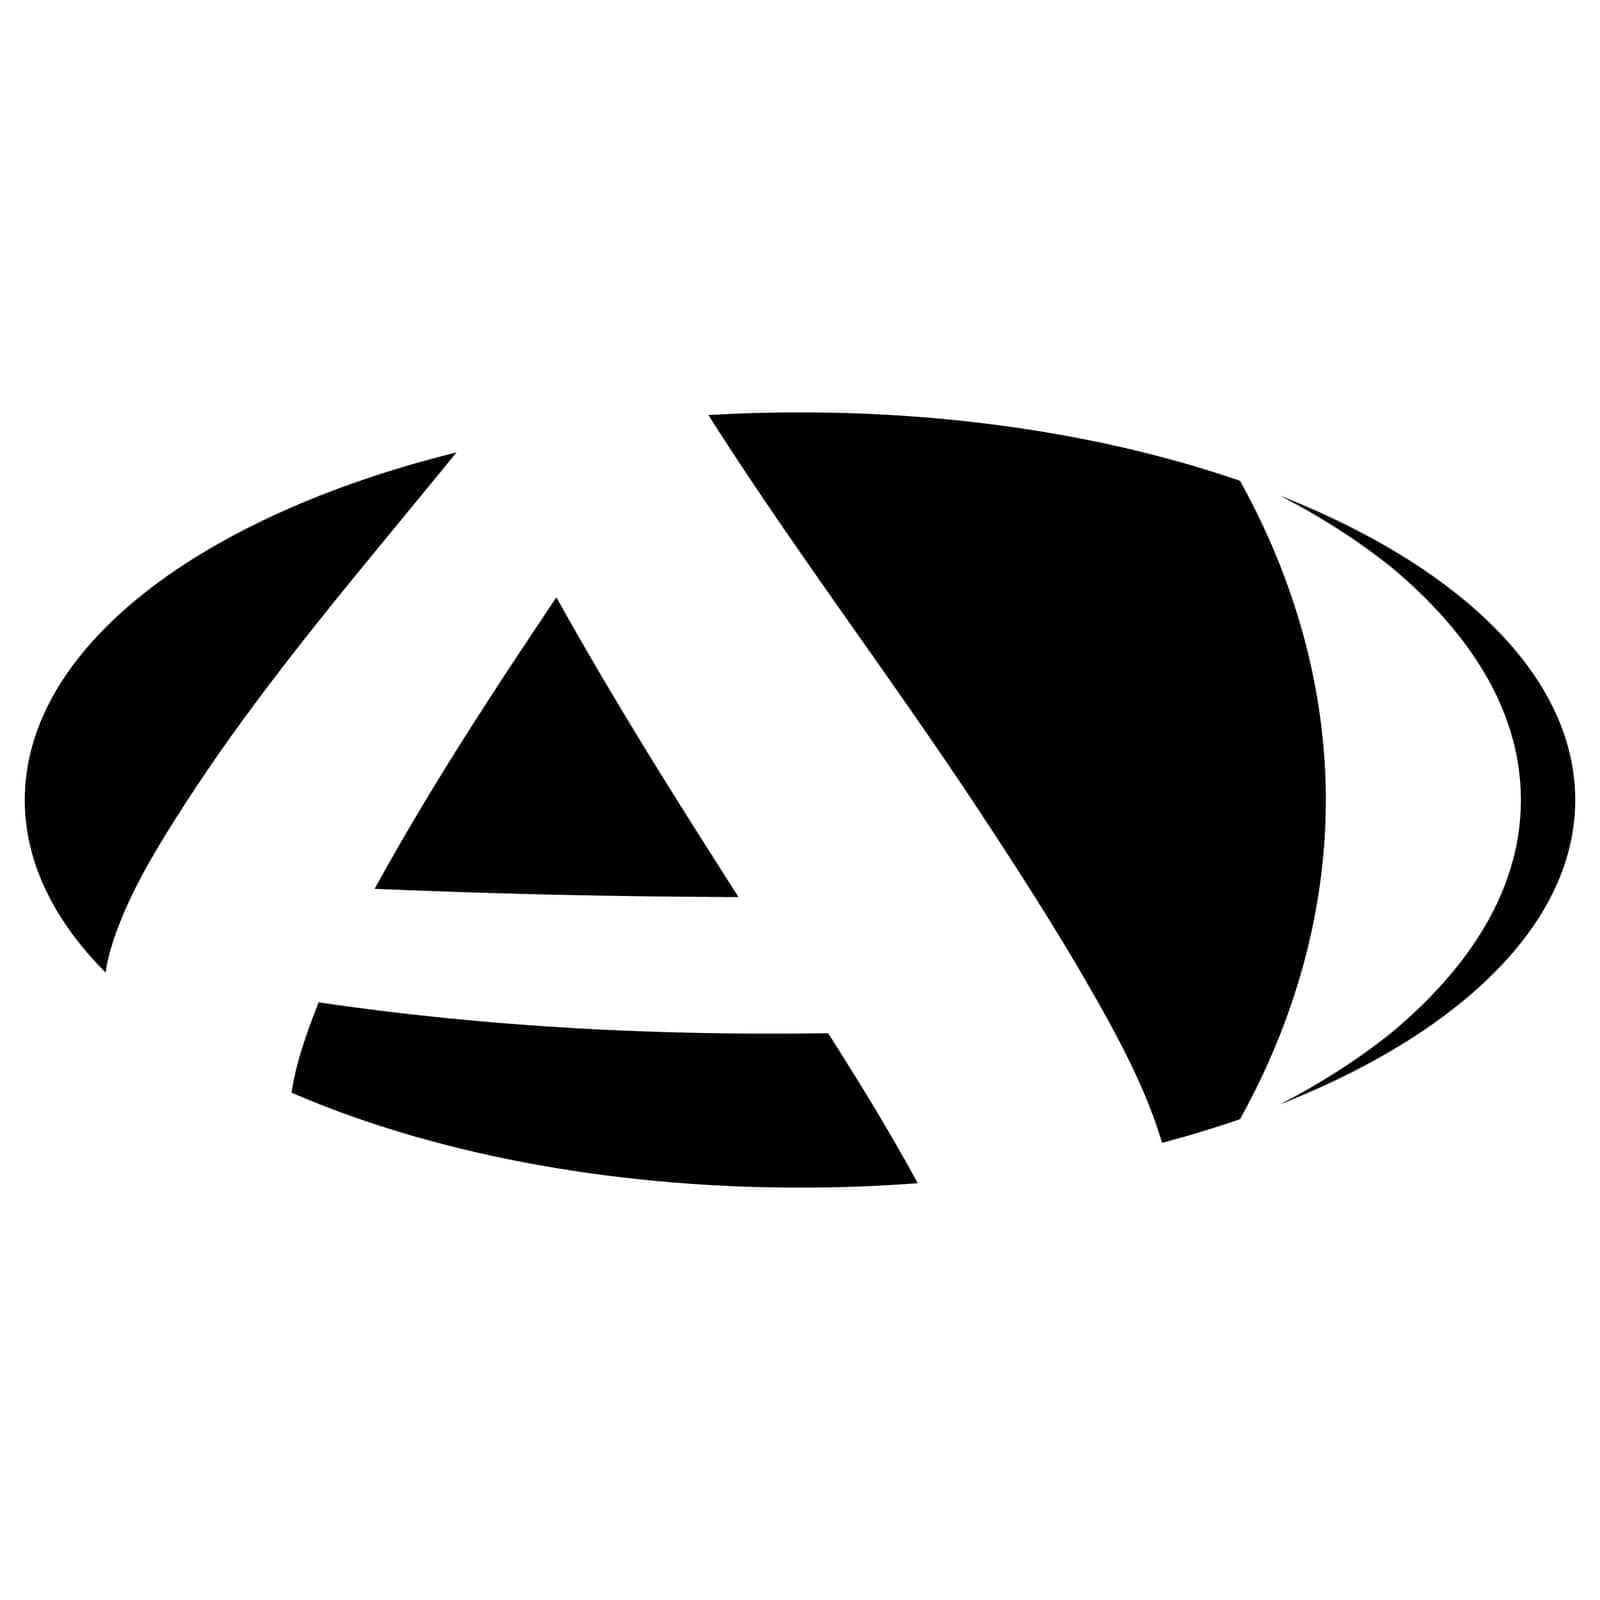 Oval logo double letter A, I two letters ai ia by koksikoks